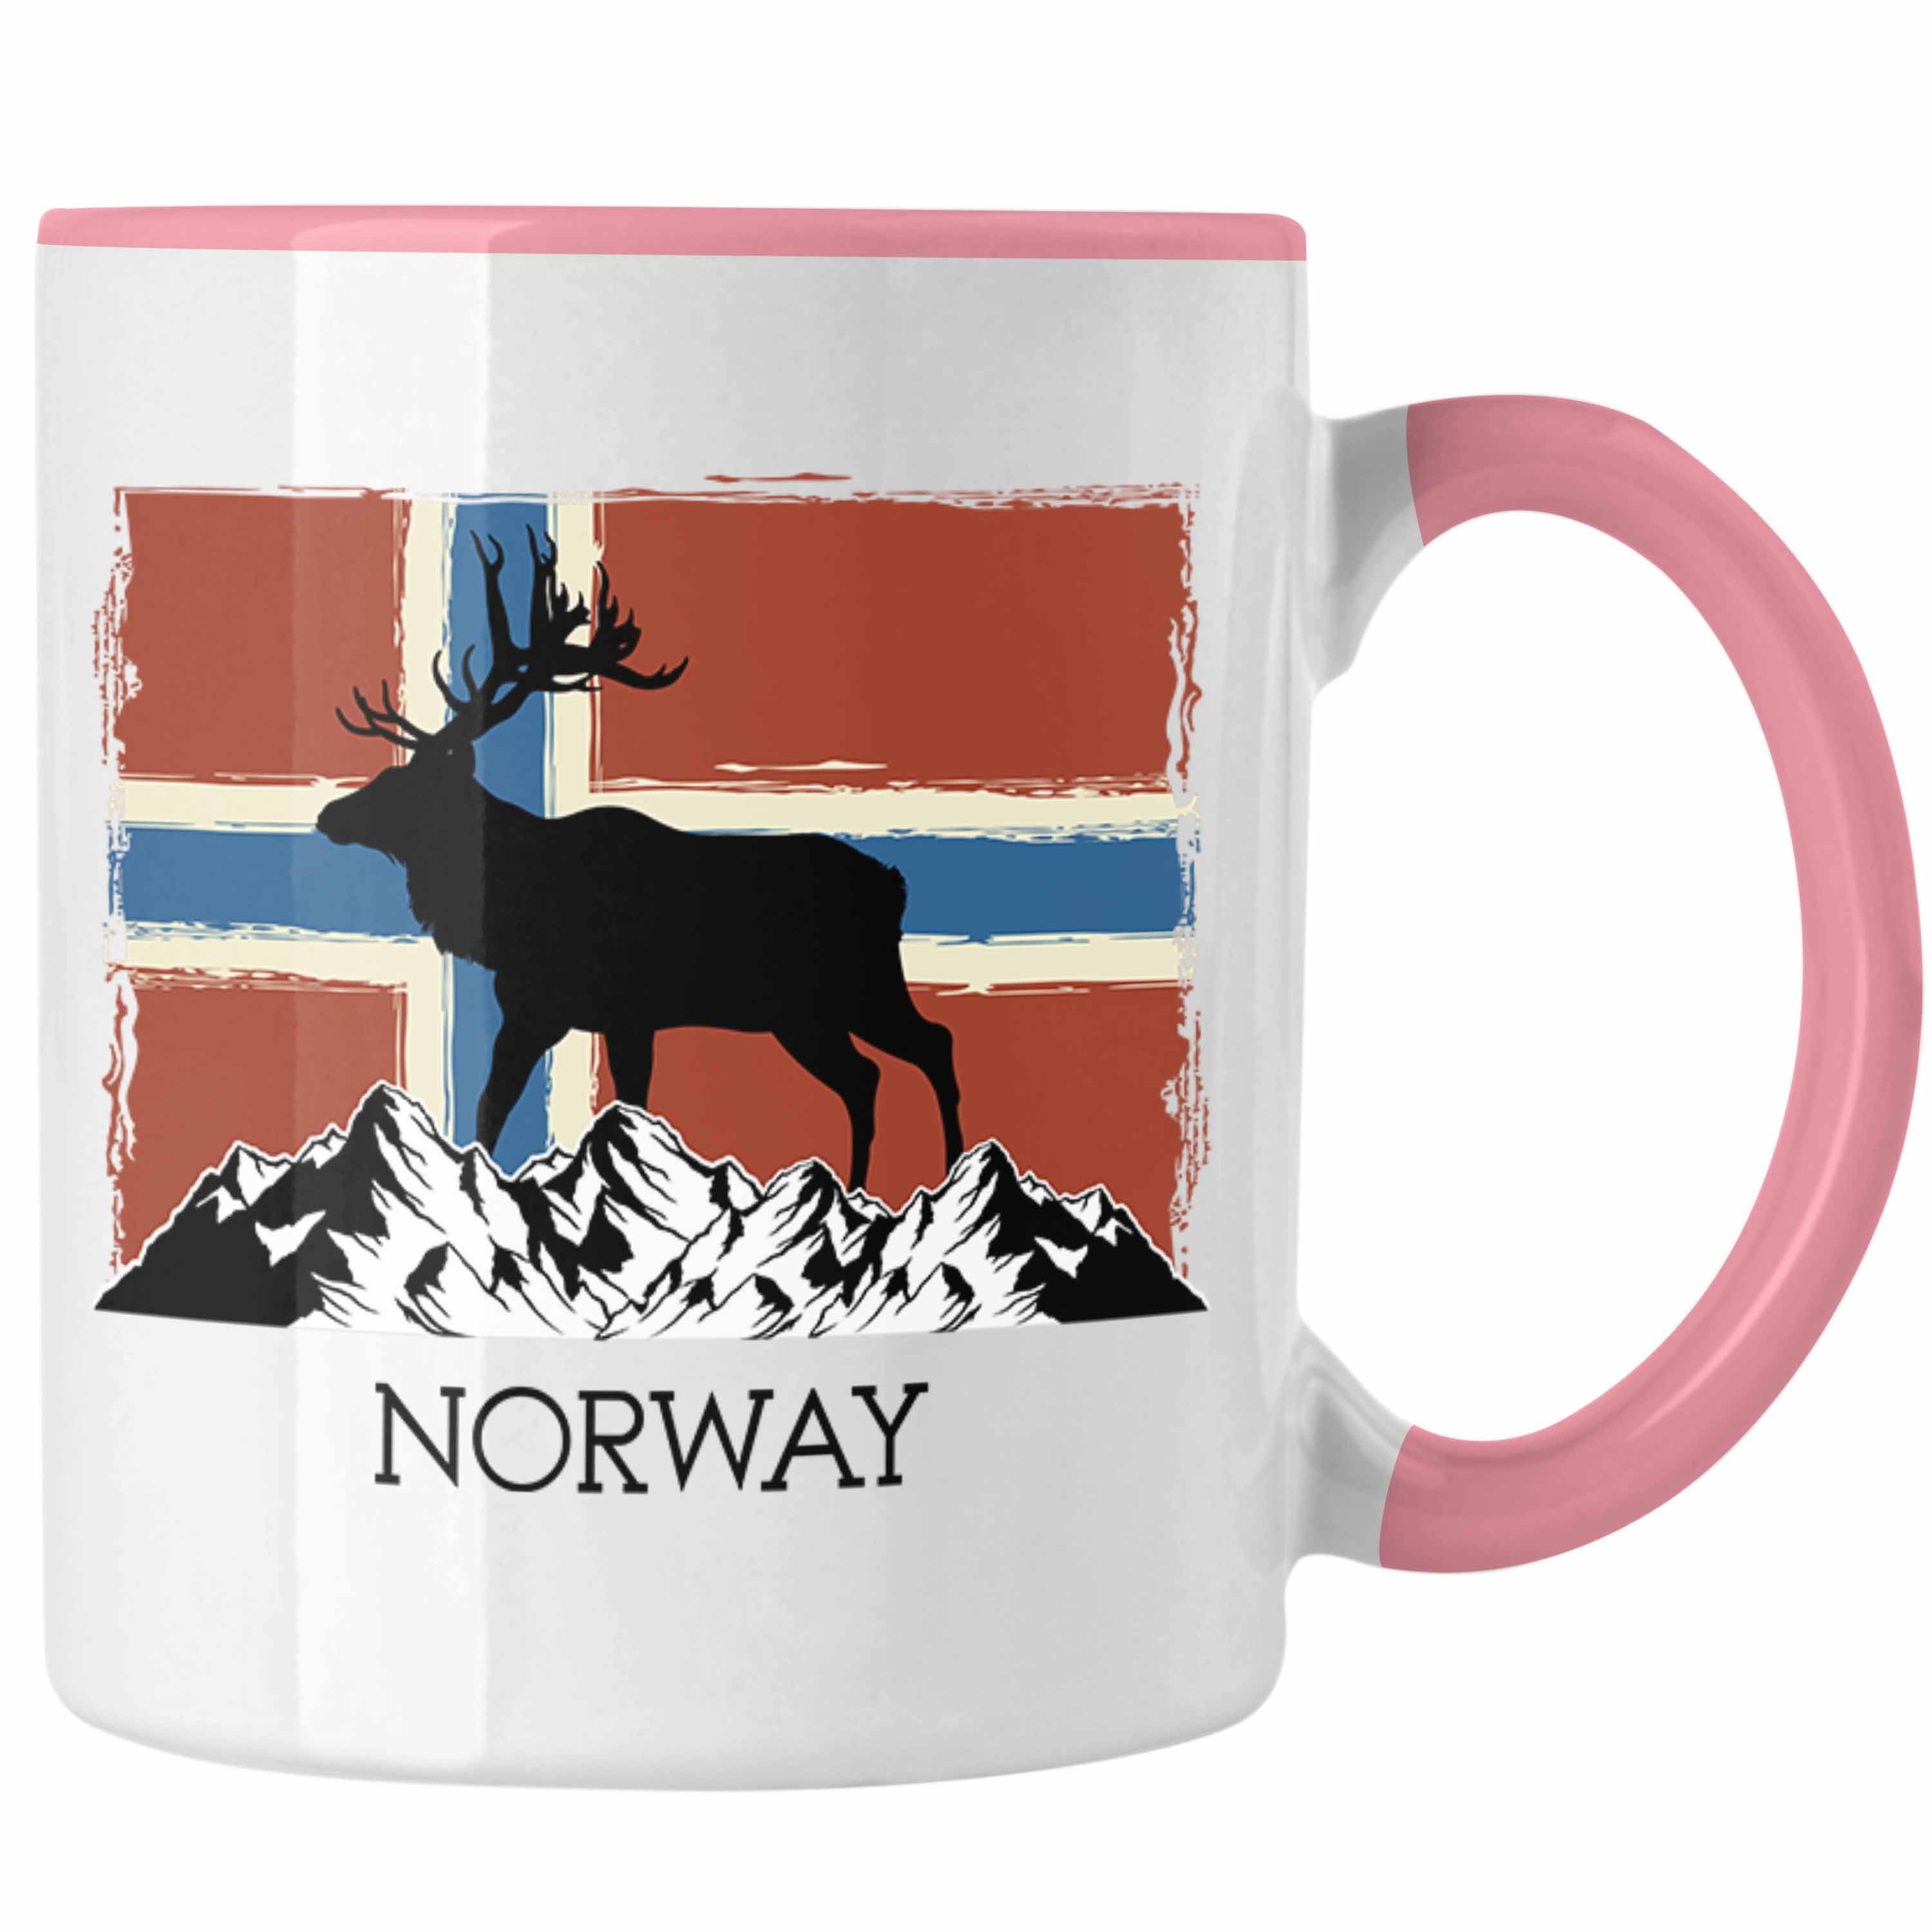 Trendation Tasse Trendation - Norwegen Geschenke Tasse Flagge Nordkap Elch Norway Rosa